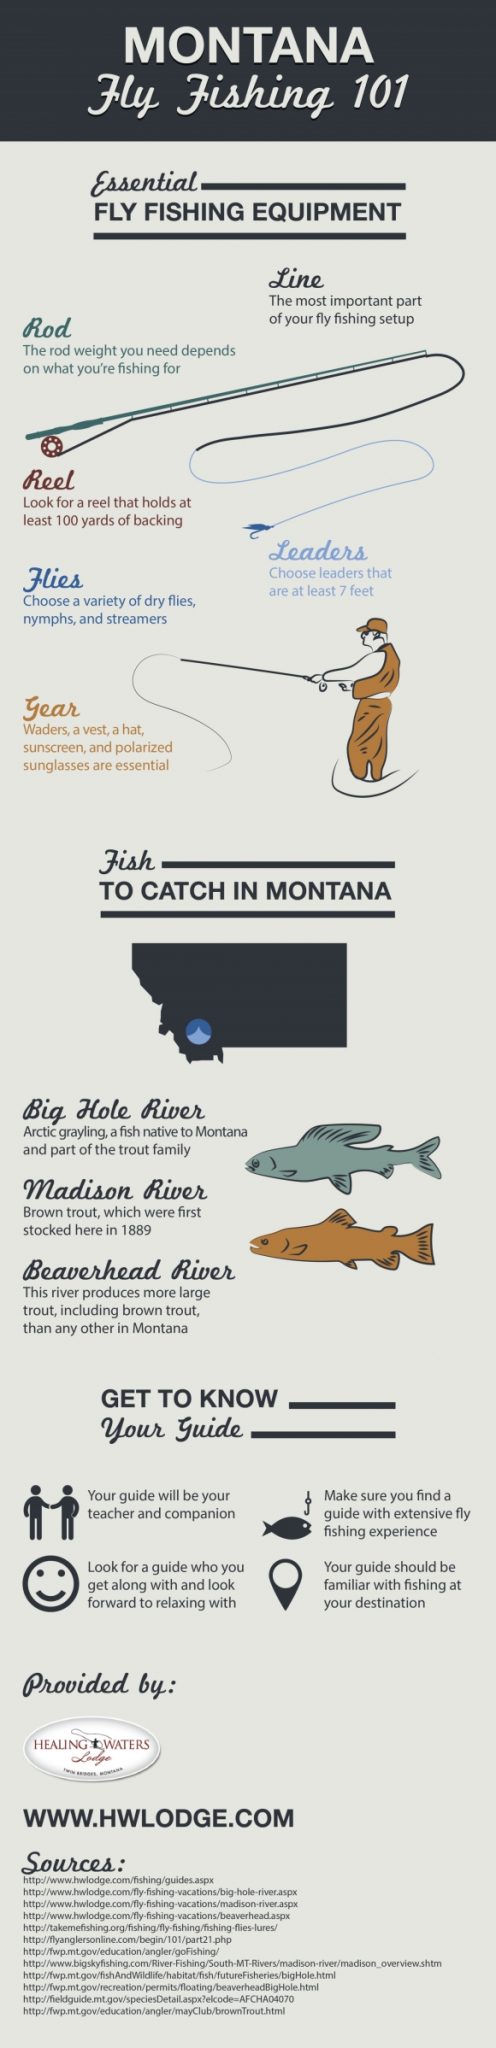 Montana-Fly-Fishing-101-Infographic[1]